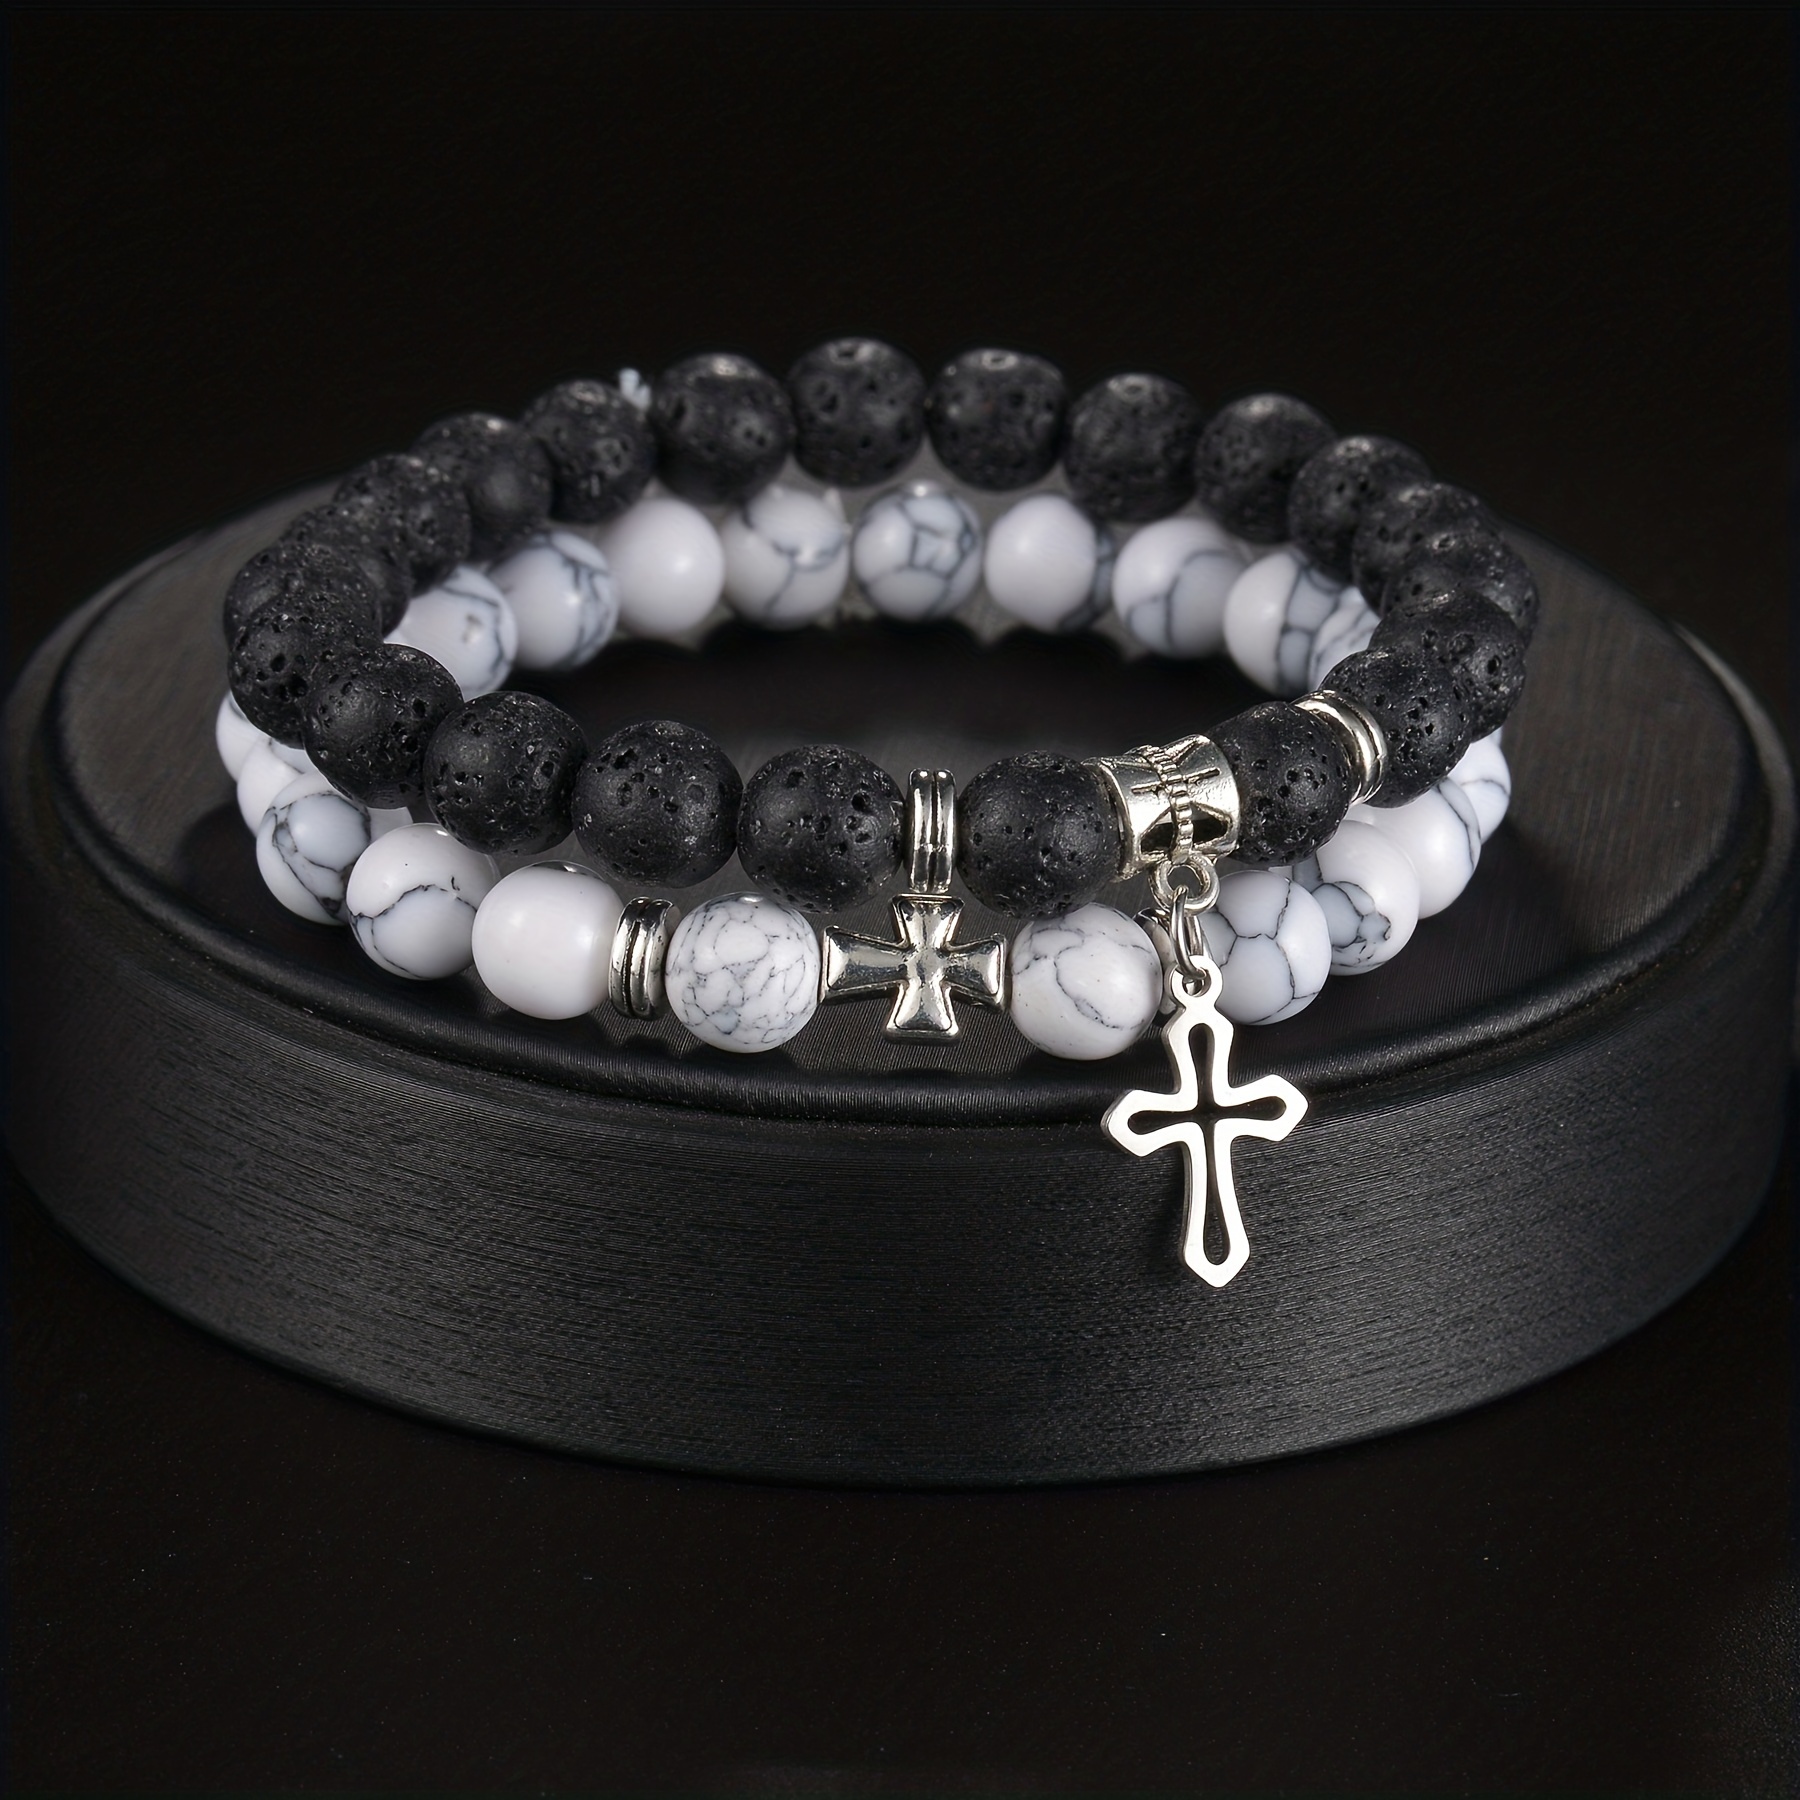 Anvazise Men Bracelet Unique Surface Volcanic Stone Fashion Jewelry Elastic  Rope Beads Bracelet for Daily Life style 1 